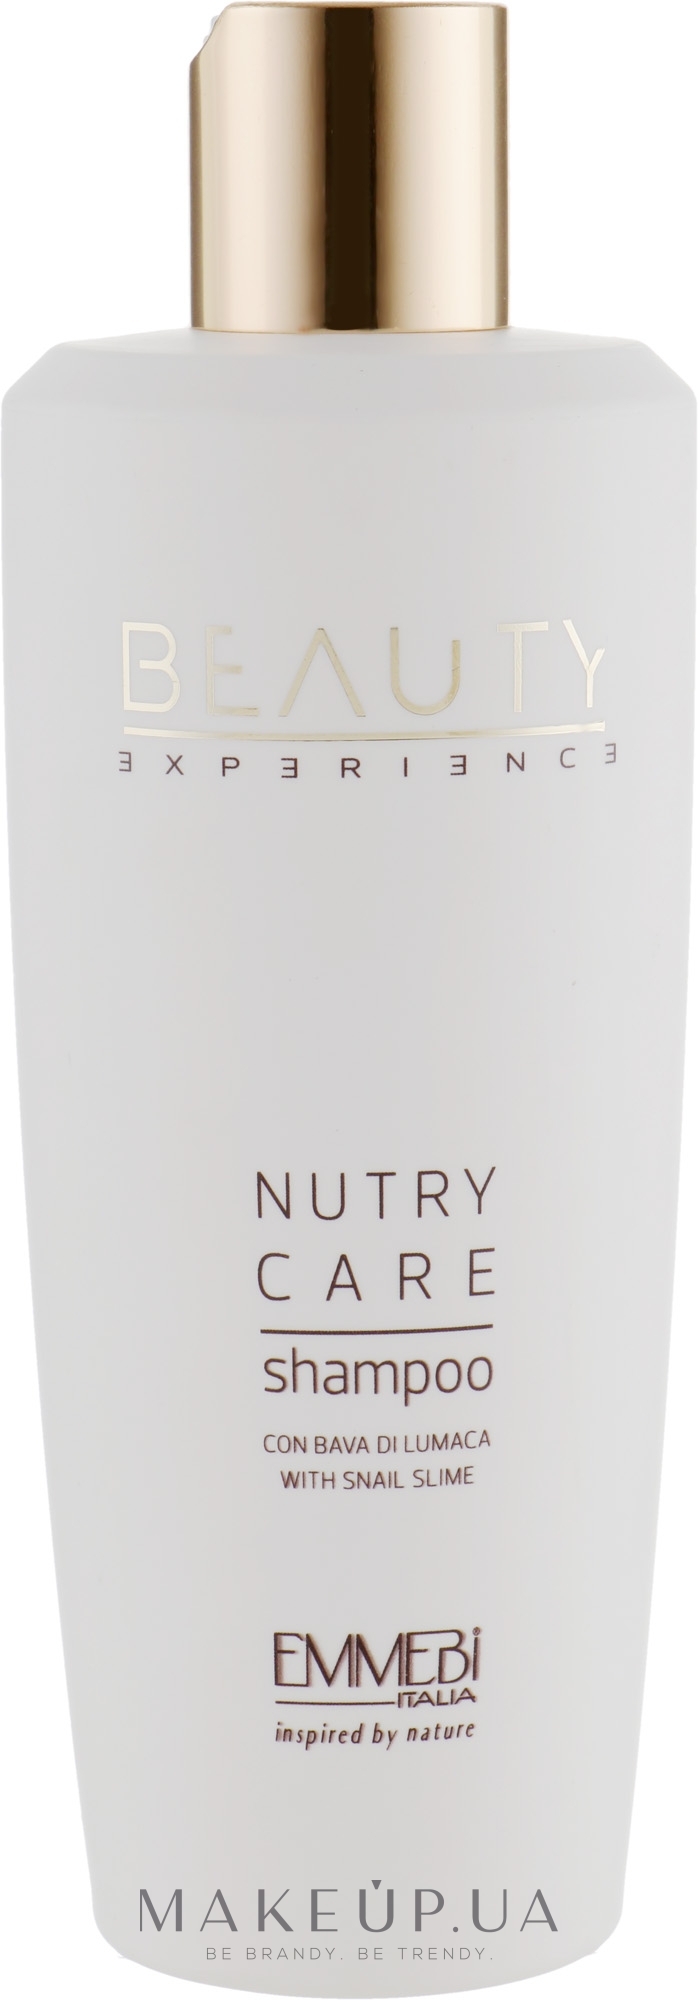 Шампунь «Немедленное восстановление» - Emmebi Italia Beauty Experience Nutry Care Shampoo — фото 300ml